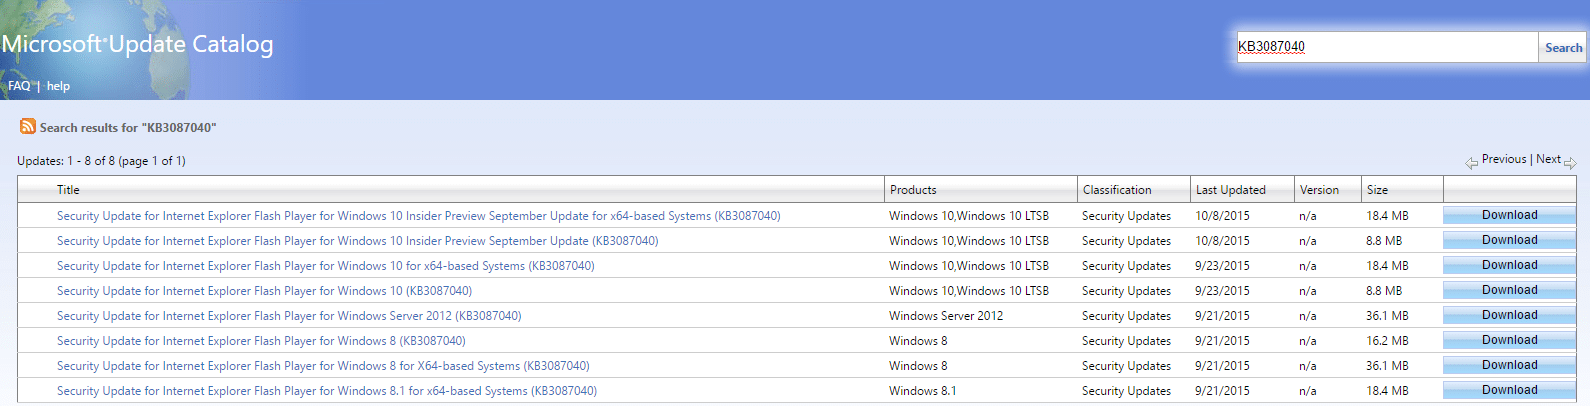 microsoft update catalog